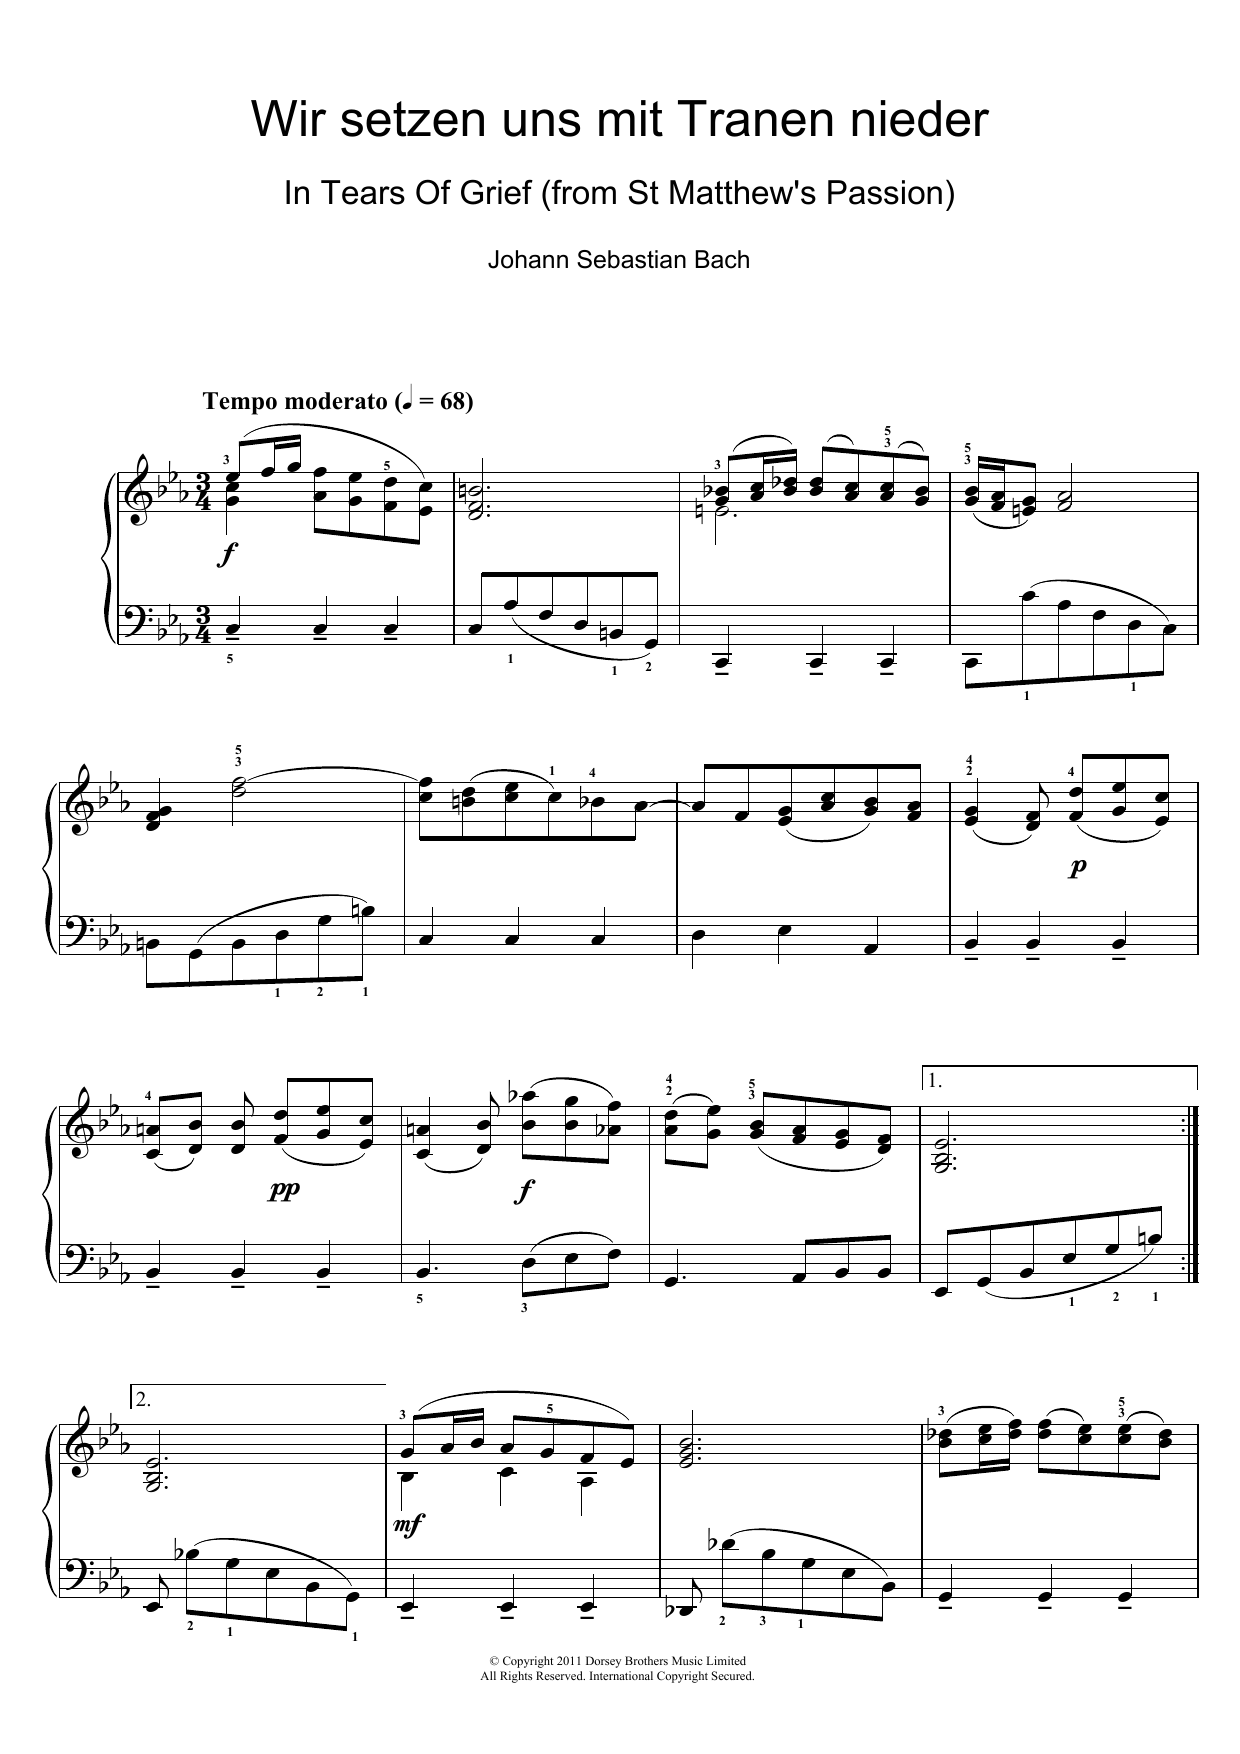 Johann Sebastian Bach Wir setzen uns mit Tranen nieder Sheet Music Notes & Chords for Piano - Download or Print PDF